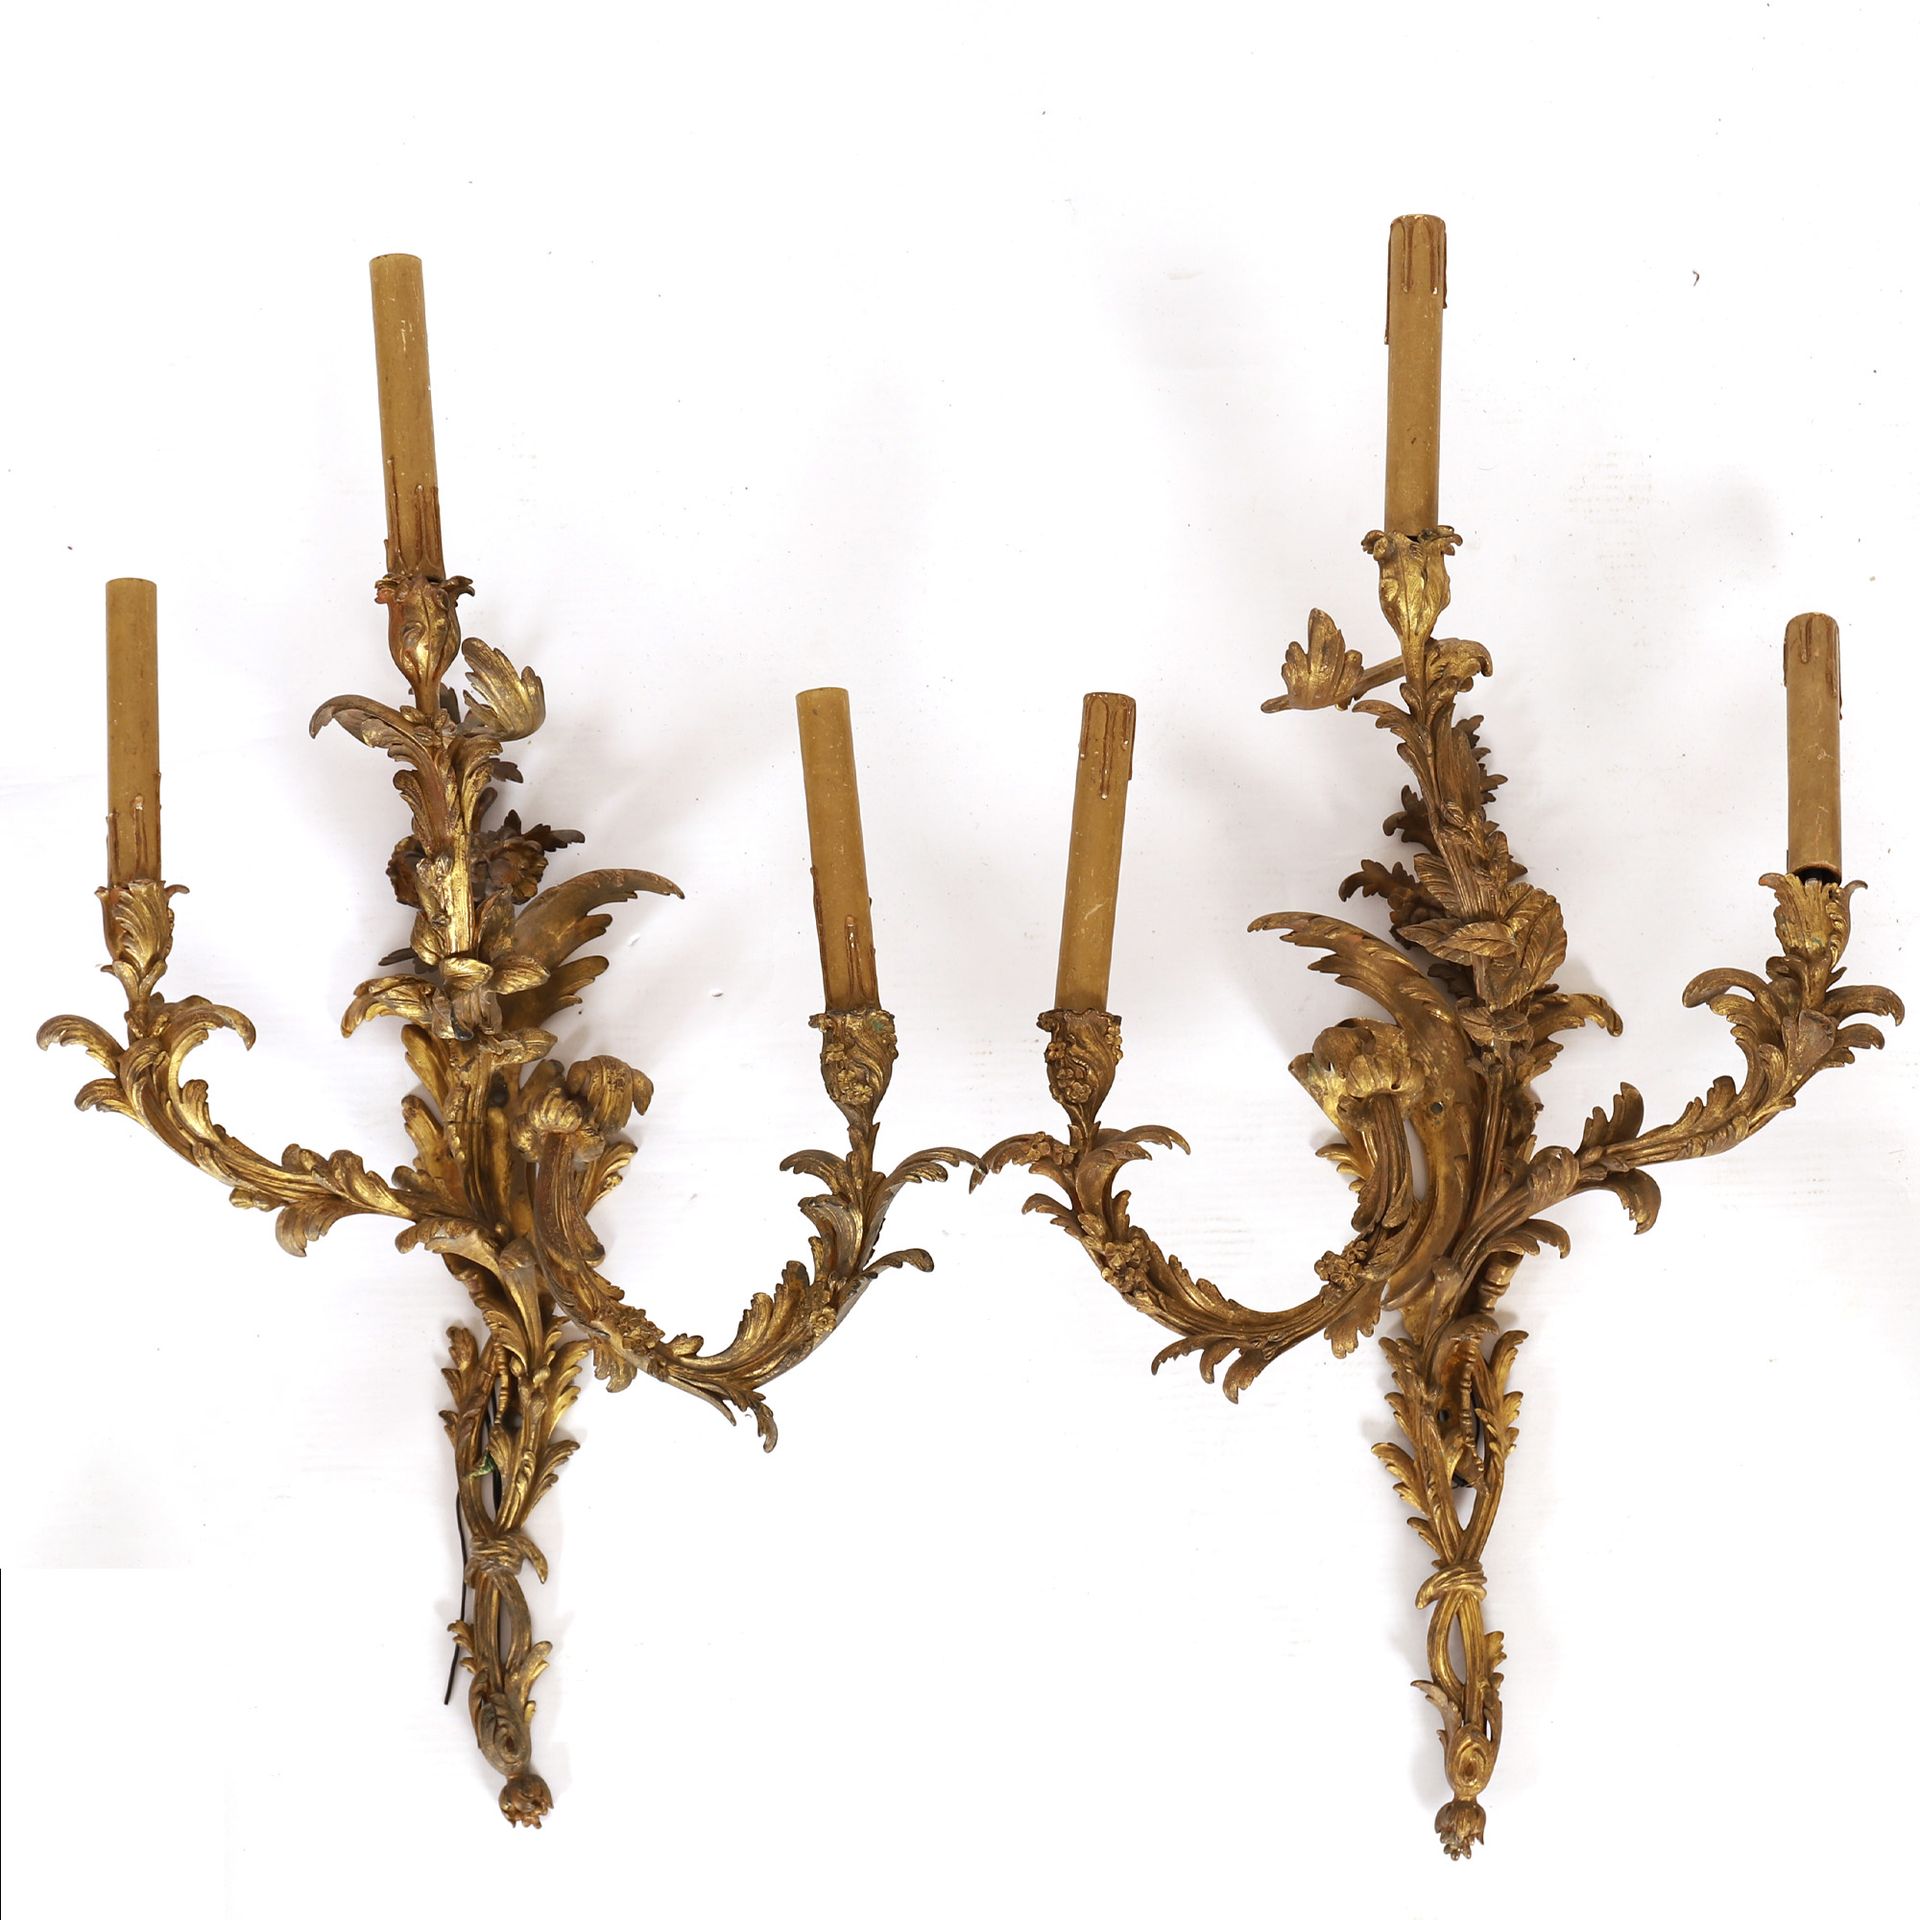 Null 一对路易十五风格的鎏金铜质壁炉

有三条带植物装饰的光臂

19世纪

高：71厘米

宽：58厘米